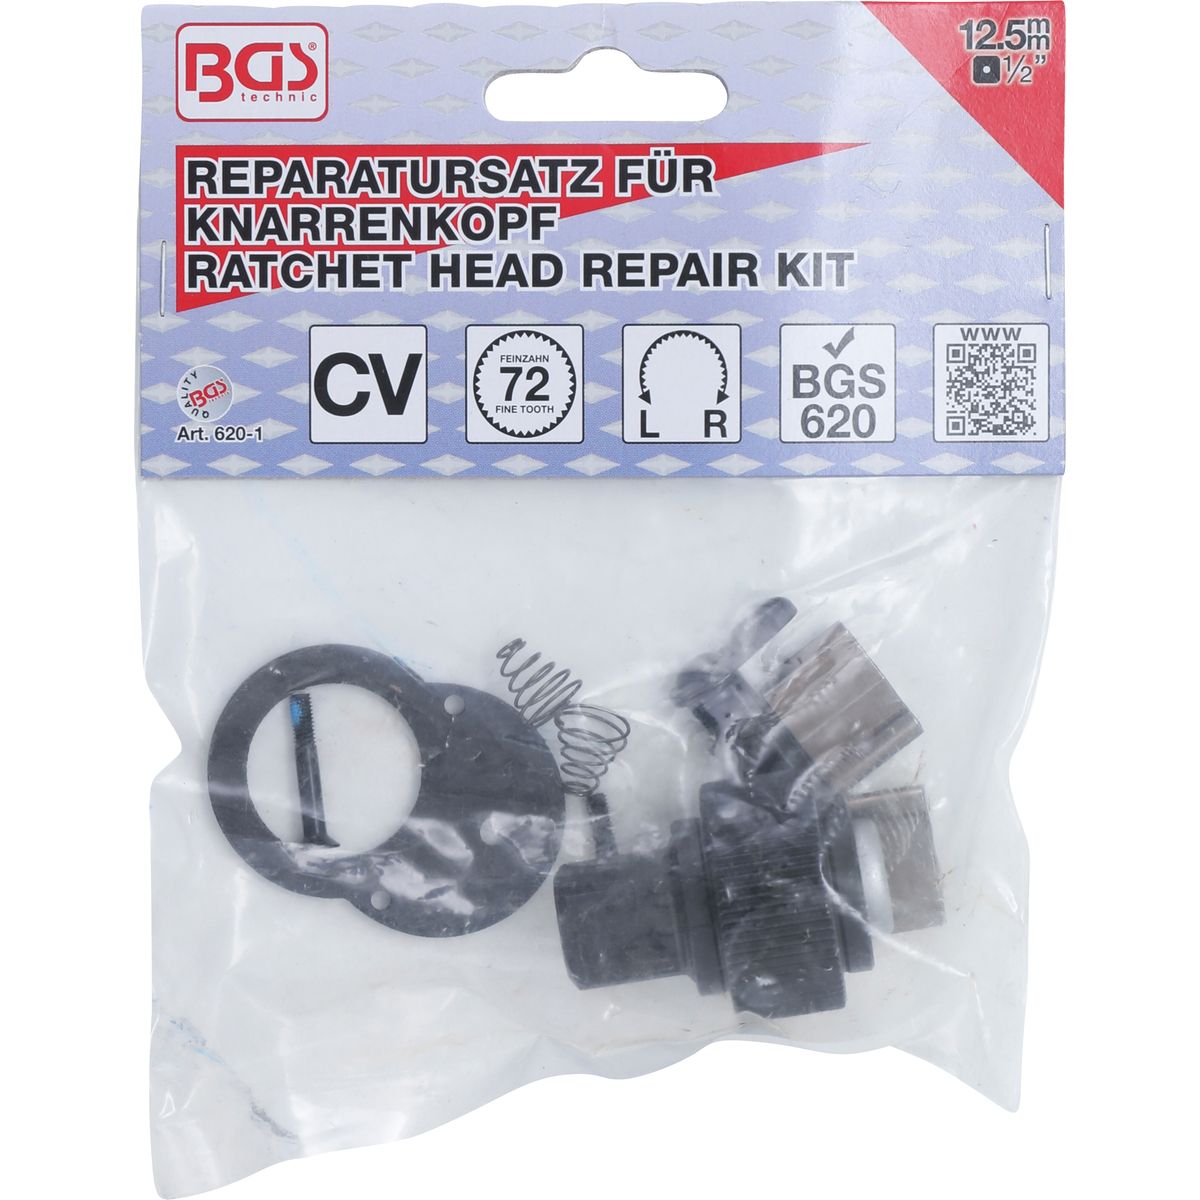 Repair Kit for Ratchet Head | for BGS 620